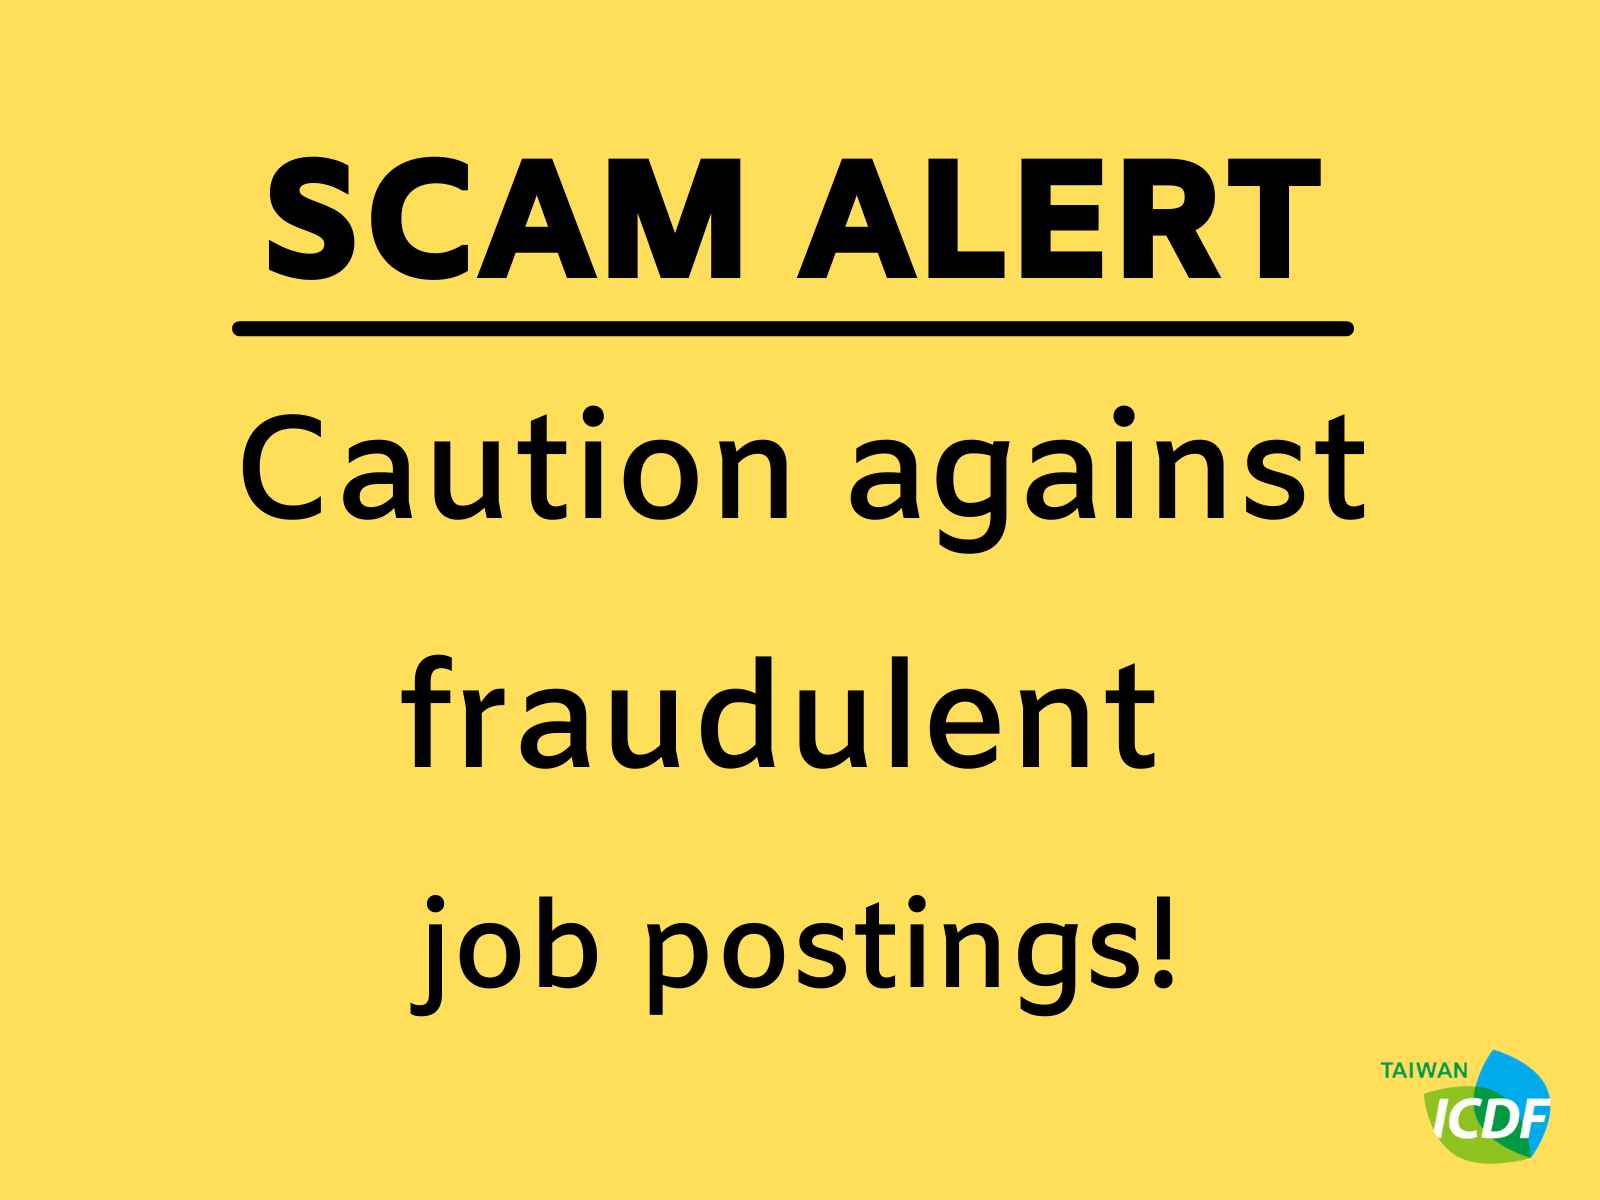 SCAM ALERT - Caution against fraudulent job postings!